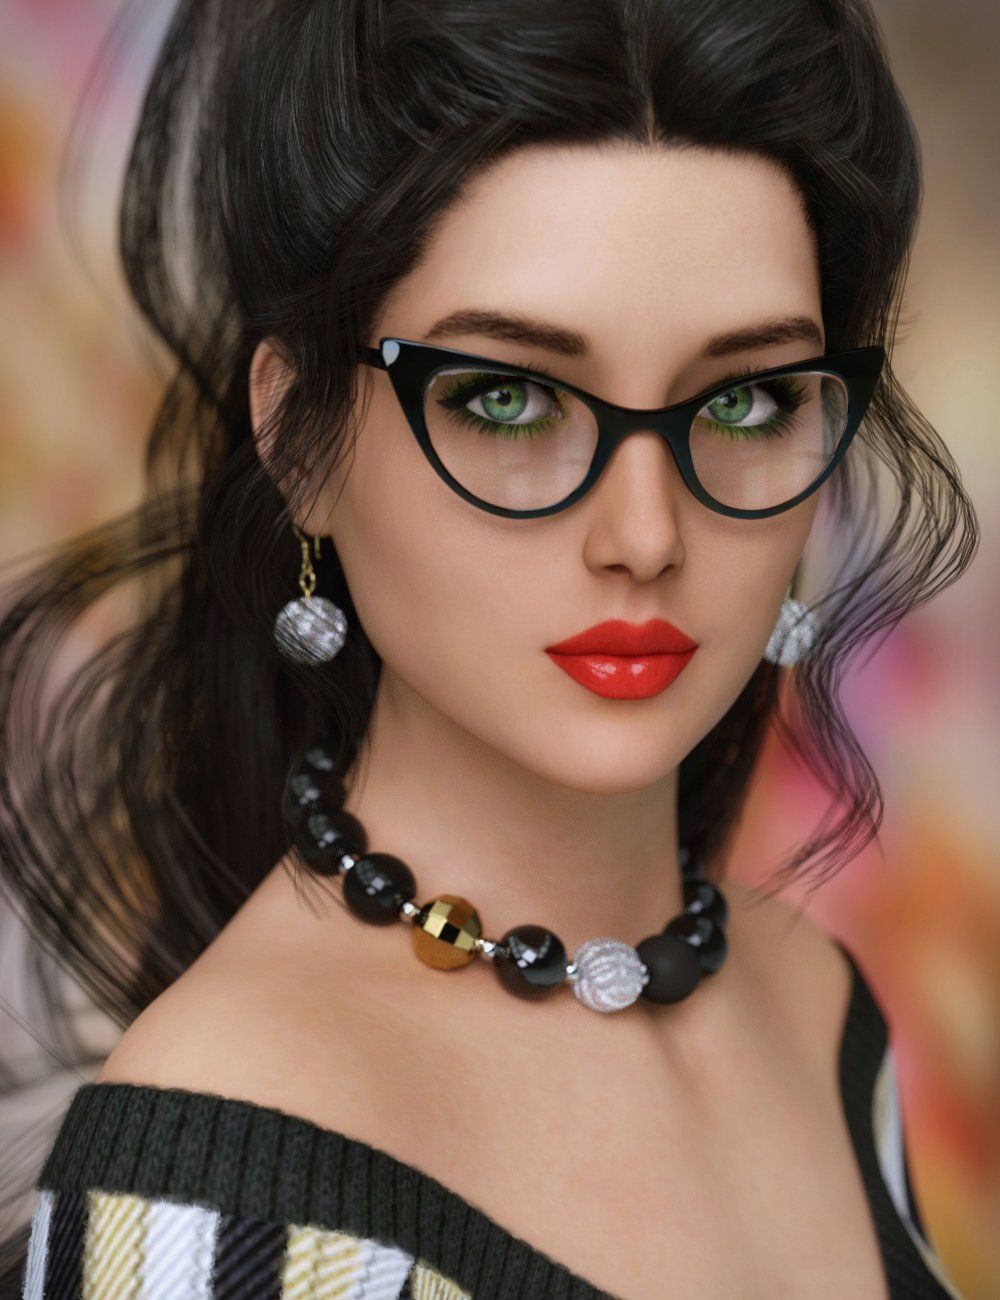 Raine for Genesis 3 Female by: addy, 3D Models by Daz 3D